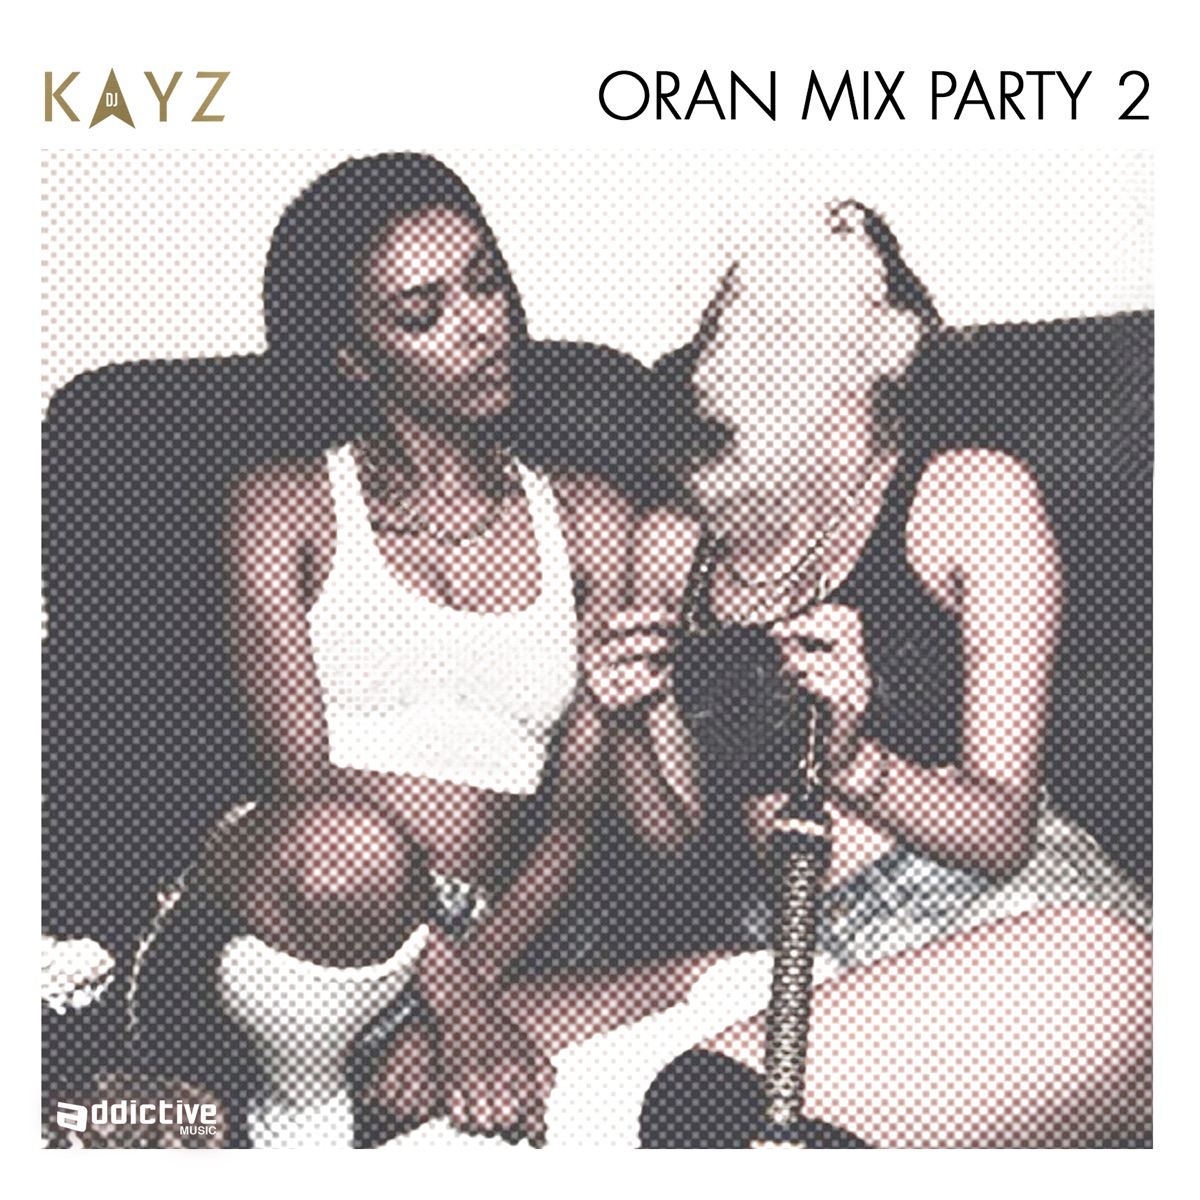 Oran Mix Party, Vol. 4 par DJ Kayz sur Apple Music